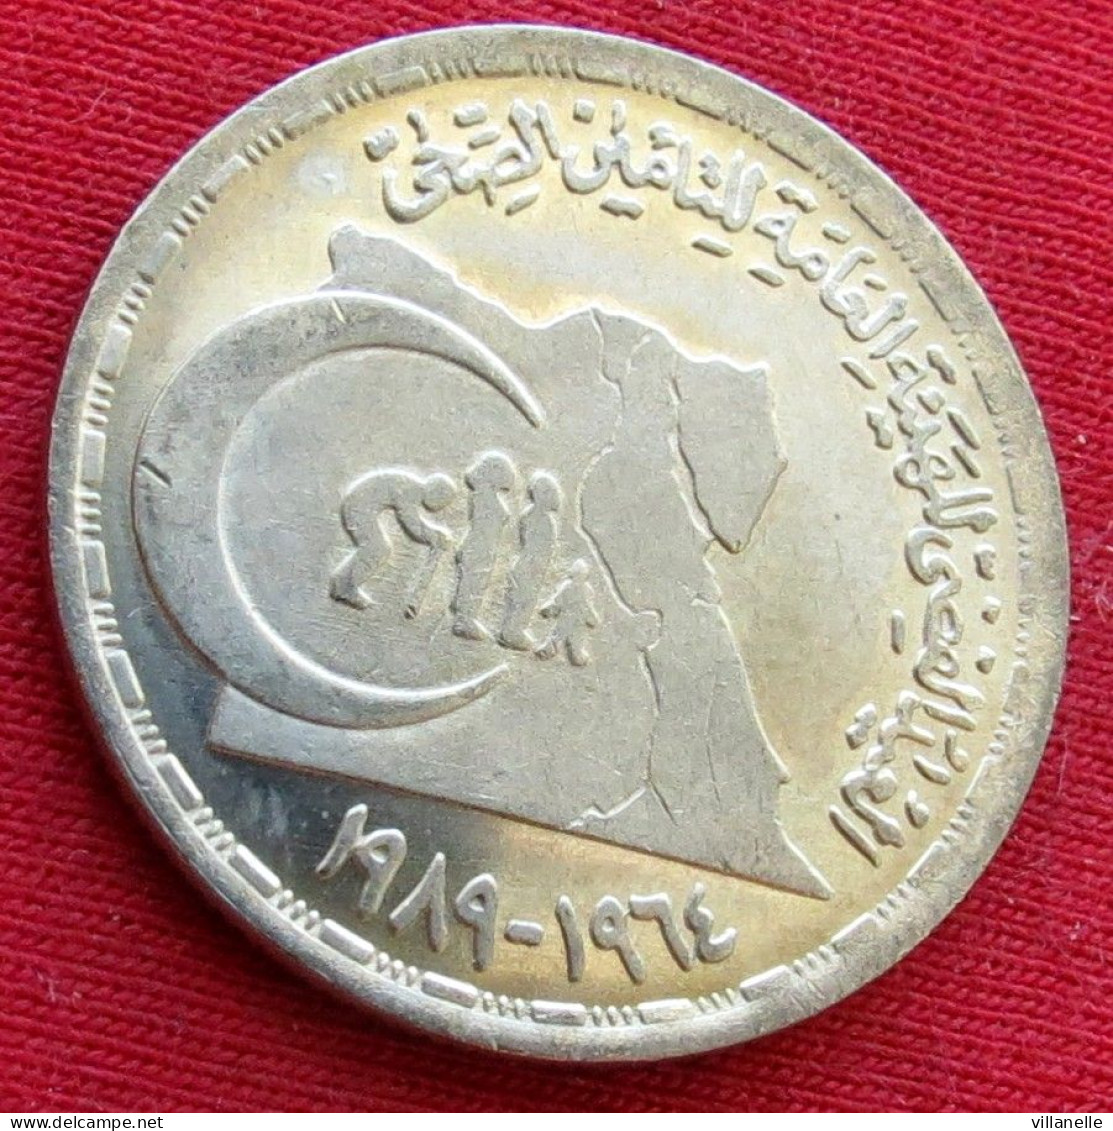 Egypt 20 Piastres 1989 Health Insurance Egipto Egypte Egito Egitto Ägypten UNC ºº - Egypt